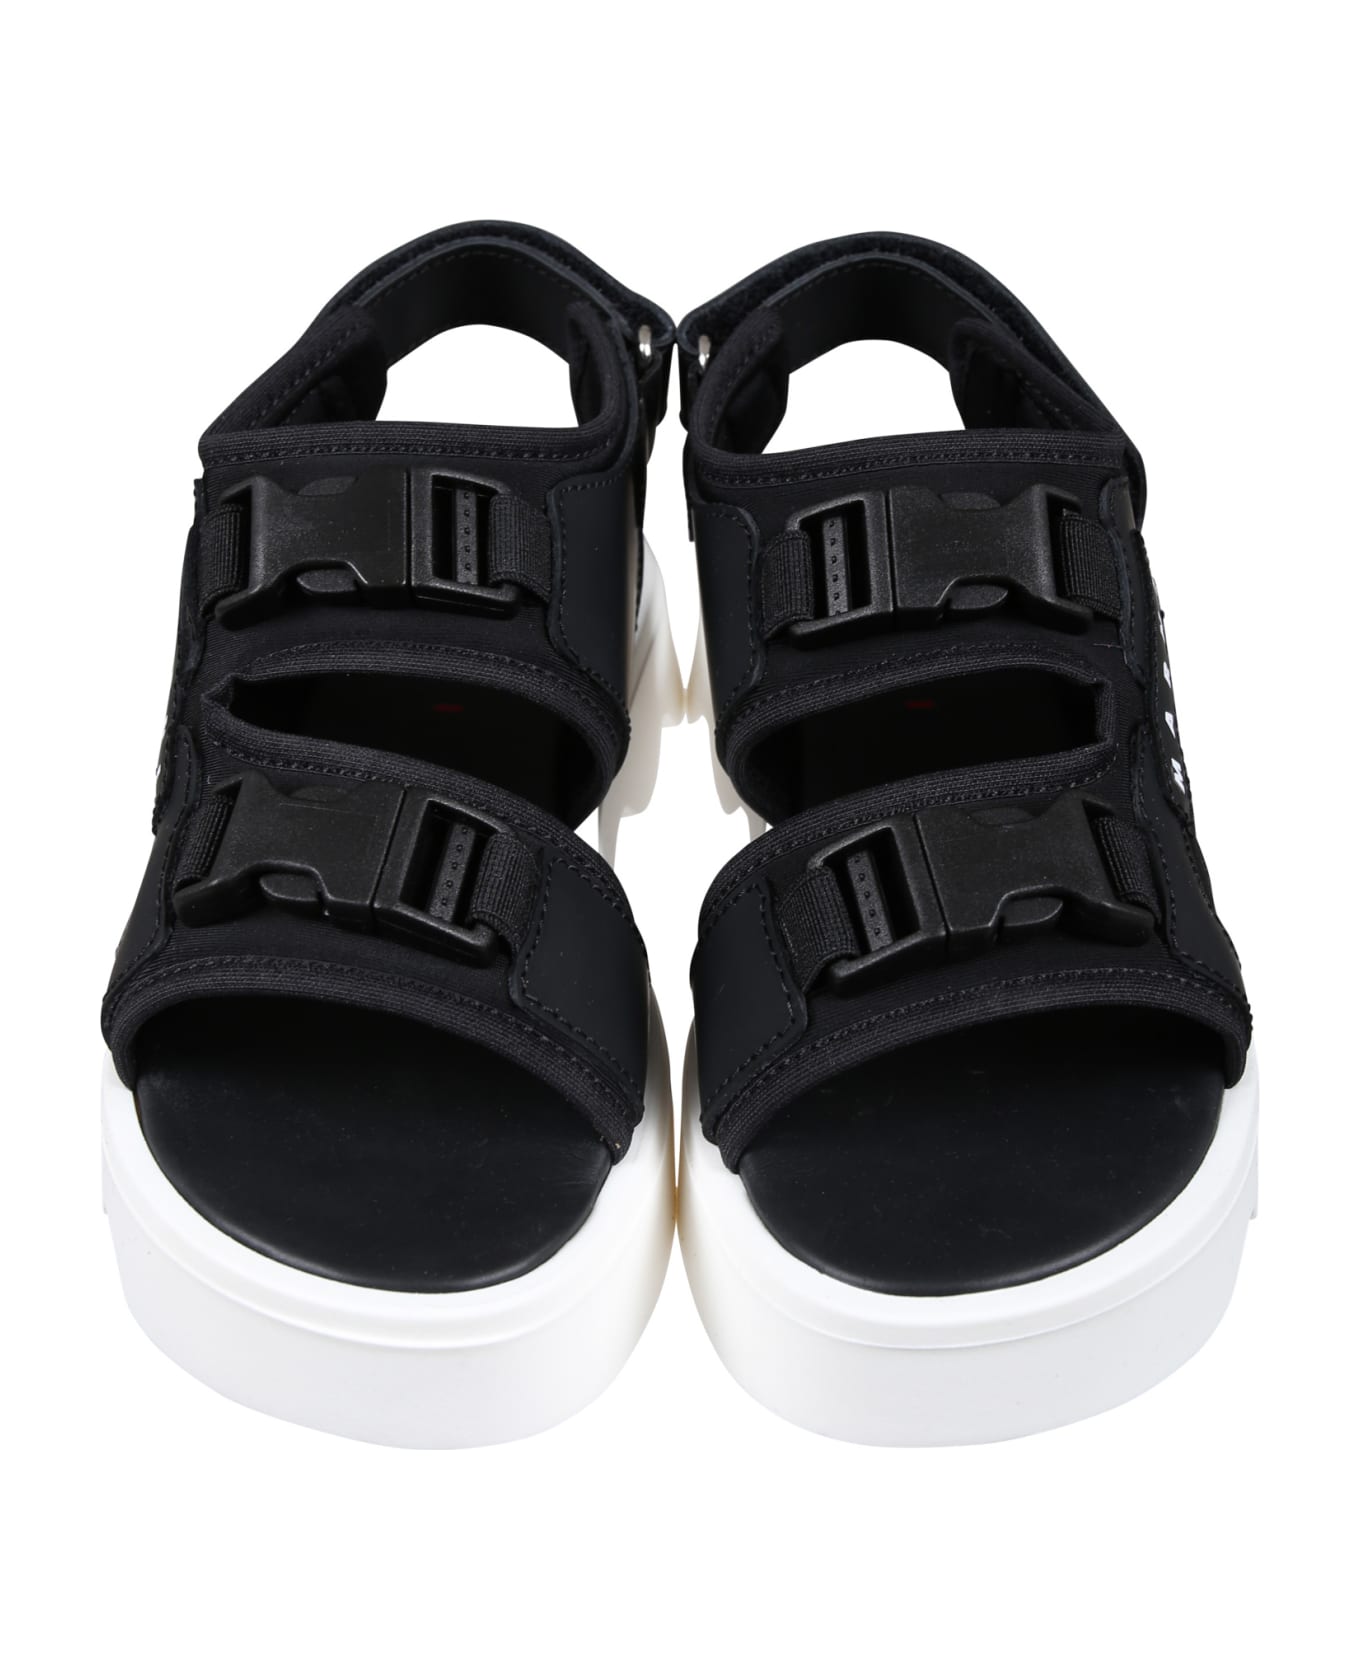 Marni Black Sandals For Girl With Logo - Black シューズ